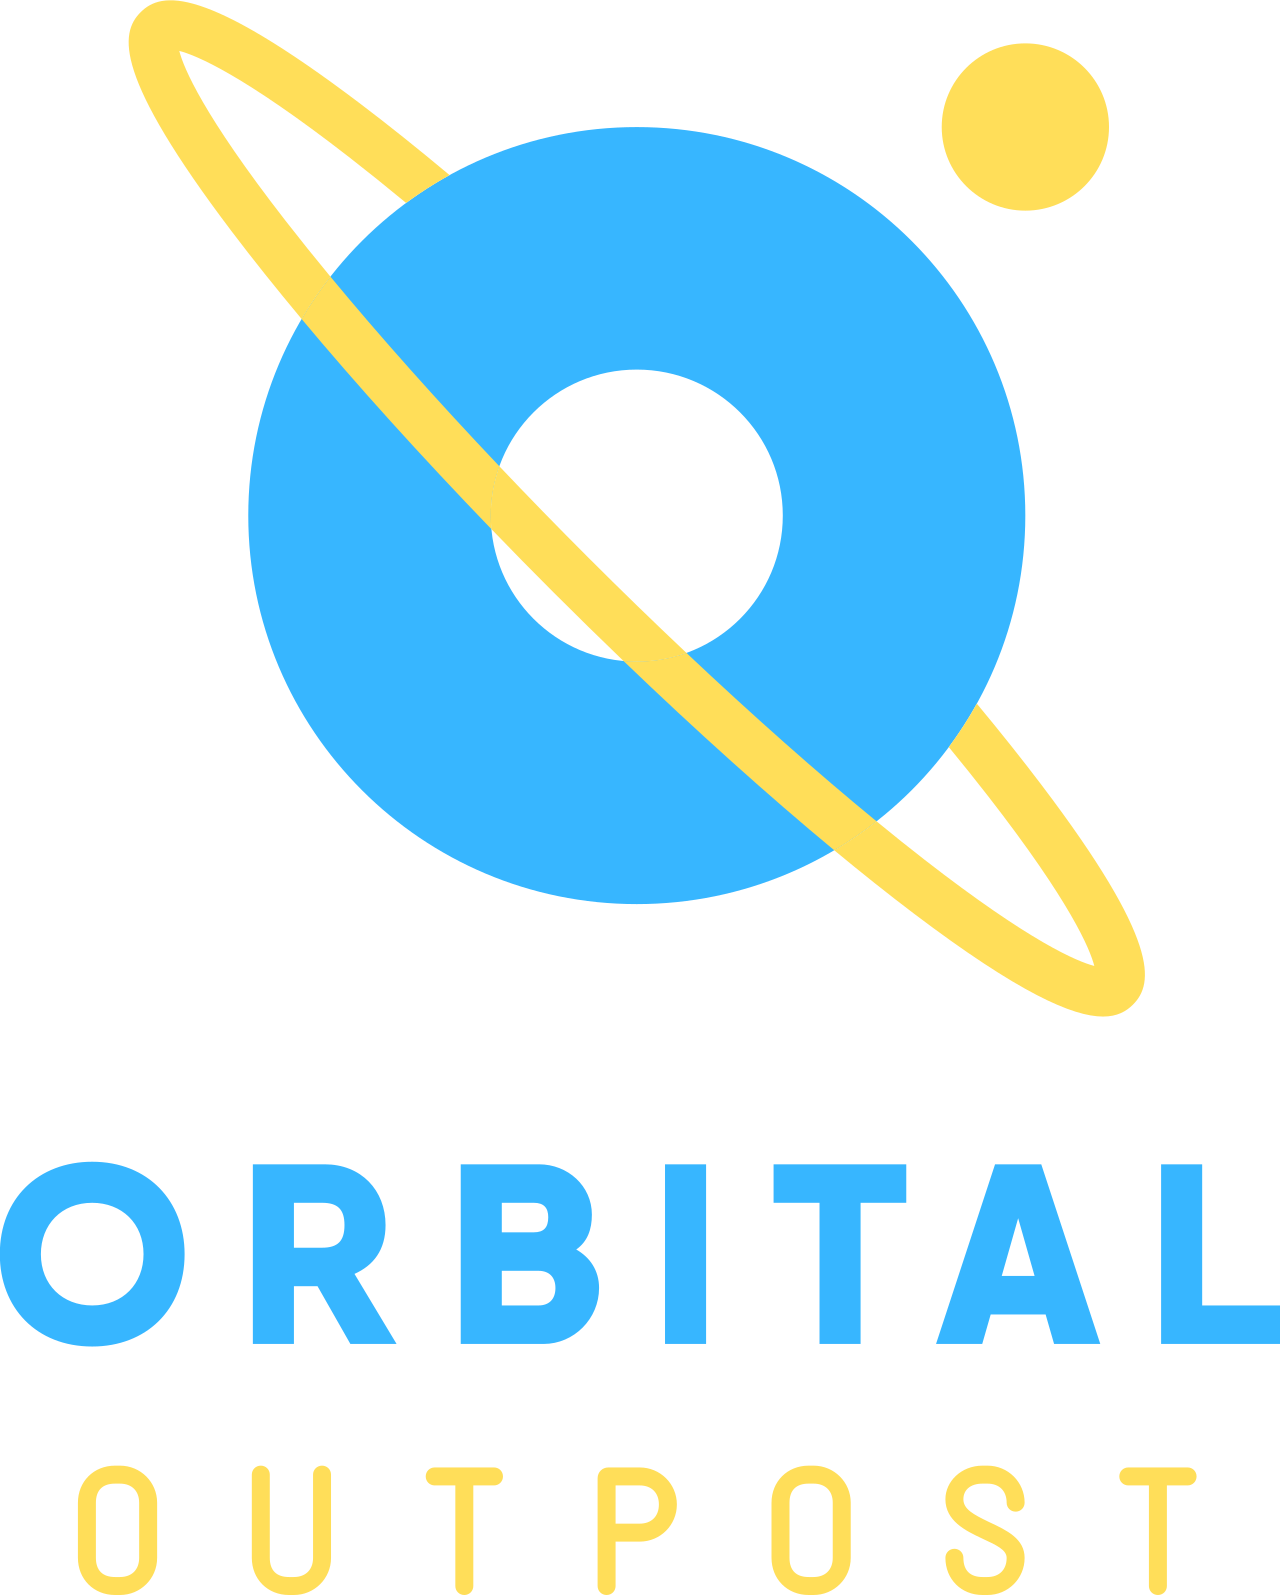 Orbital's logo